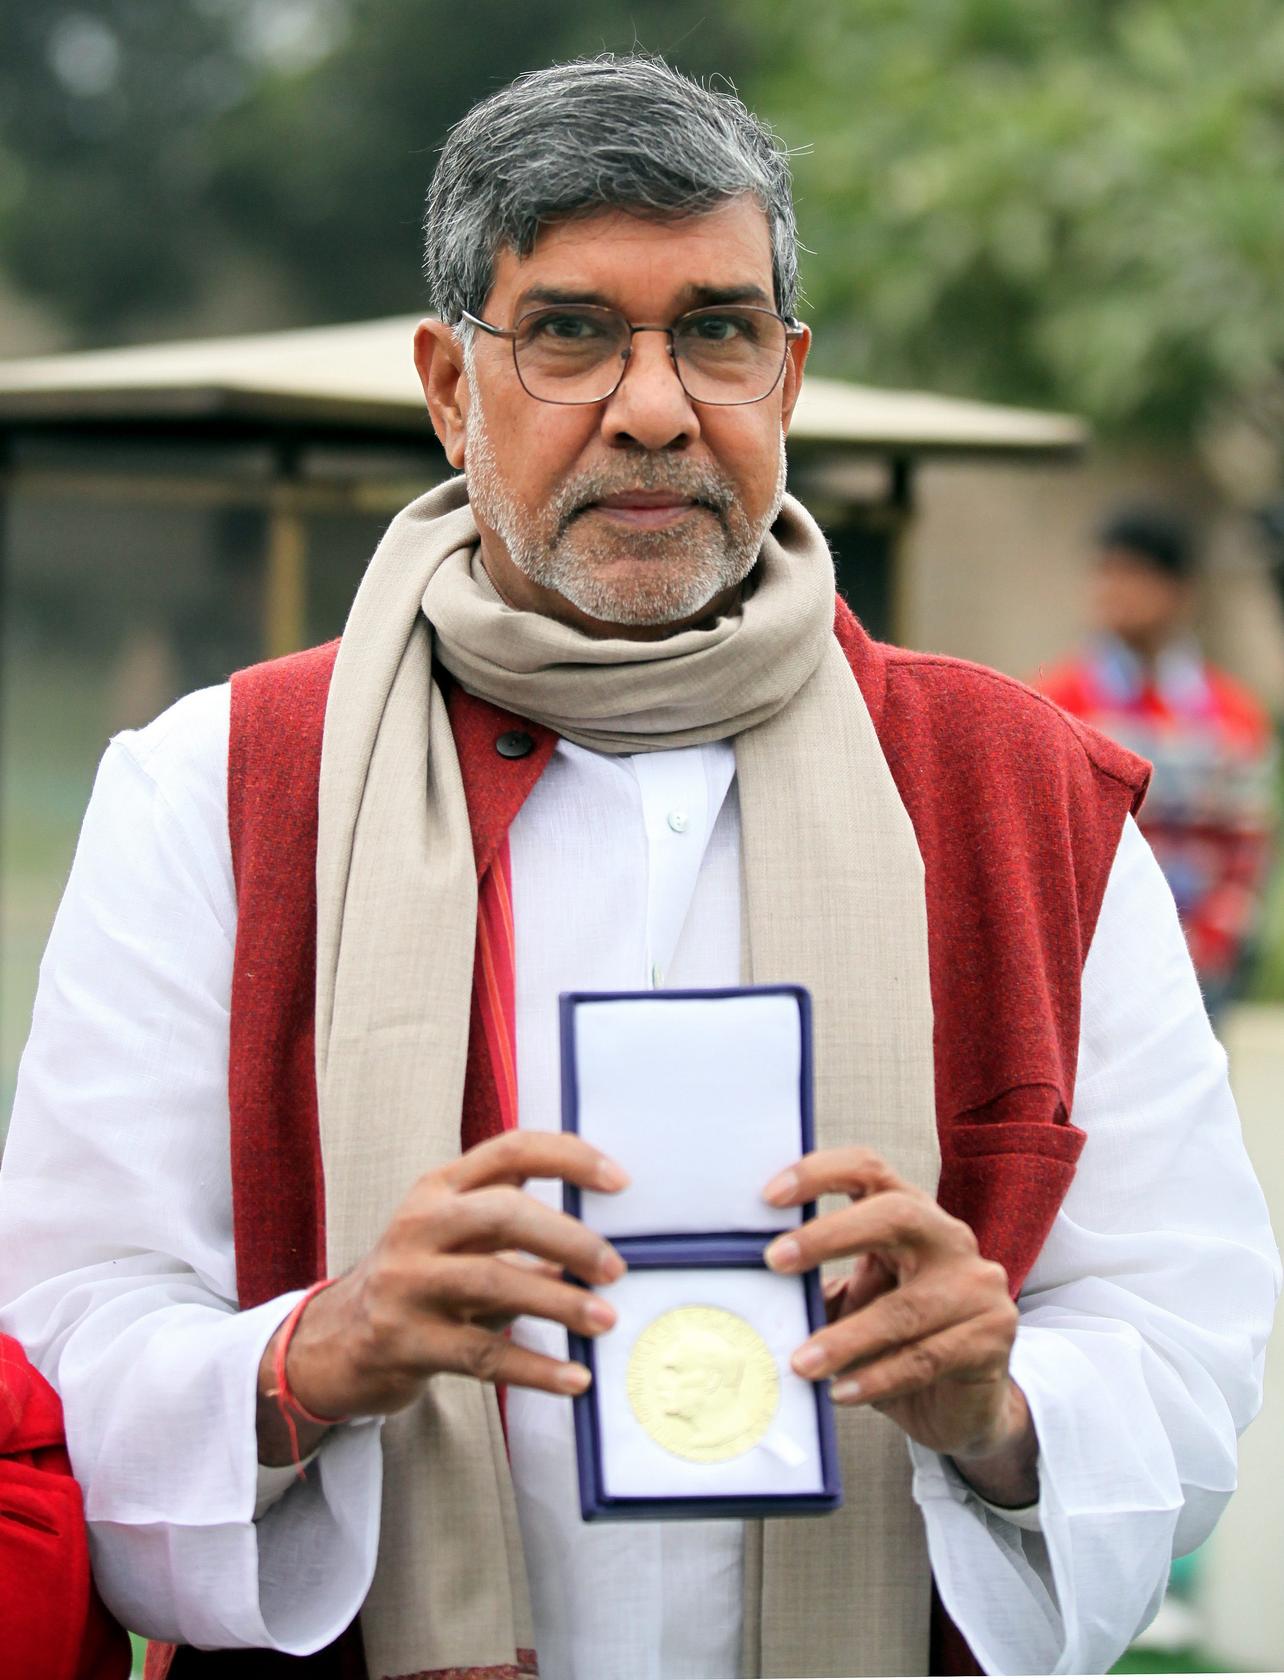 Kailash Satyarthi: Every child free to be a child. Photo: EPA